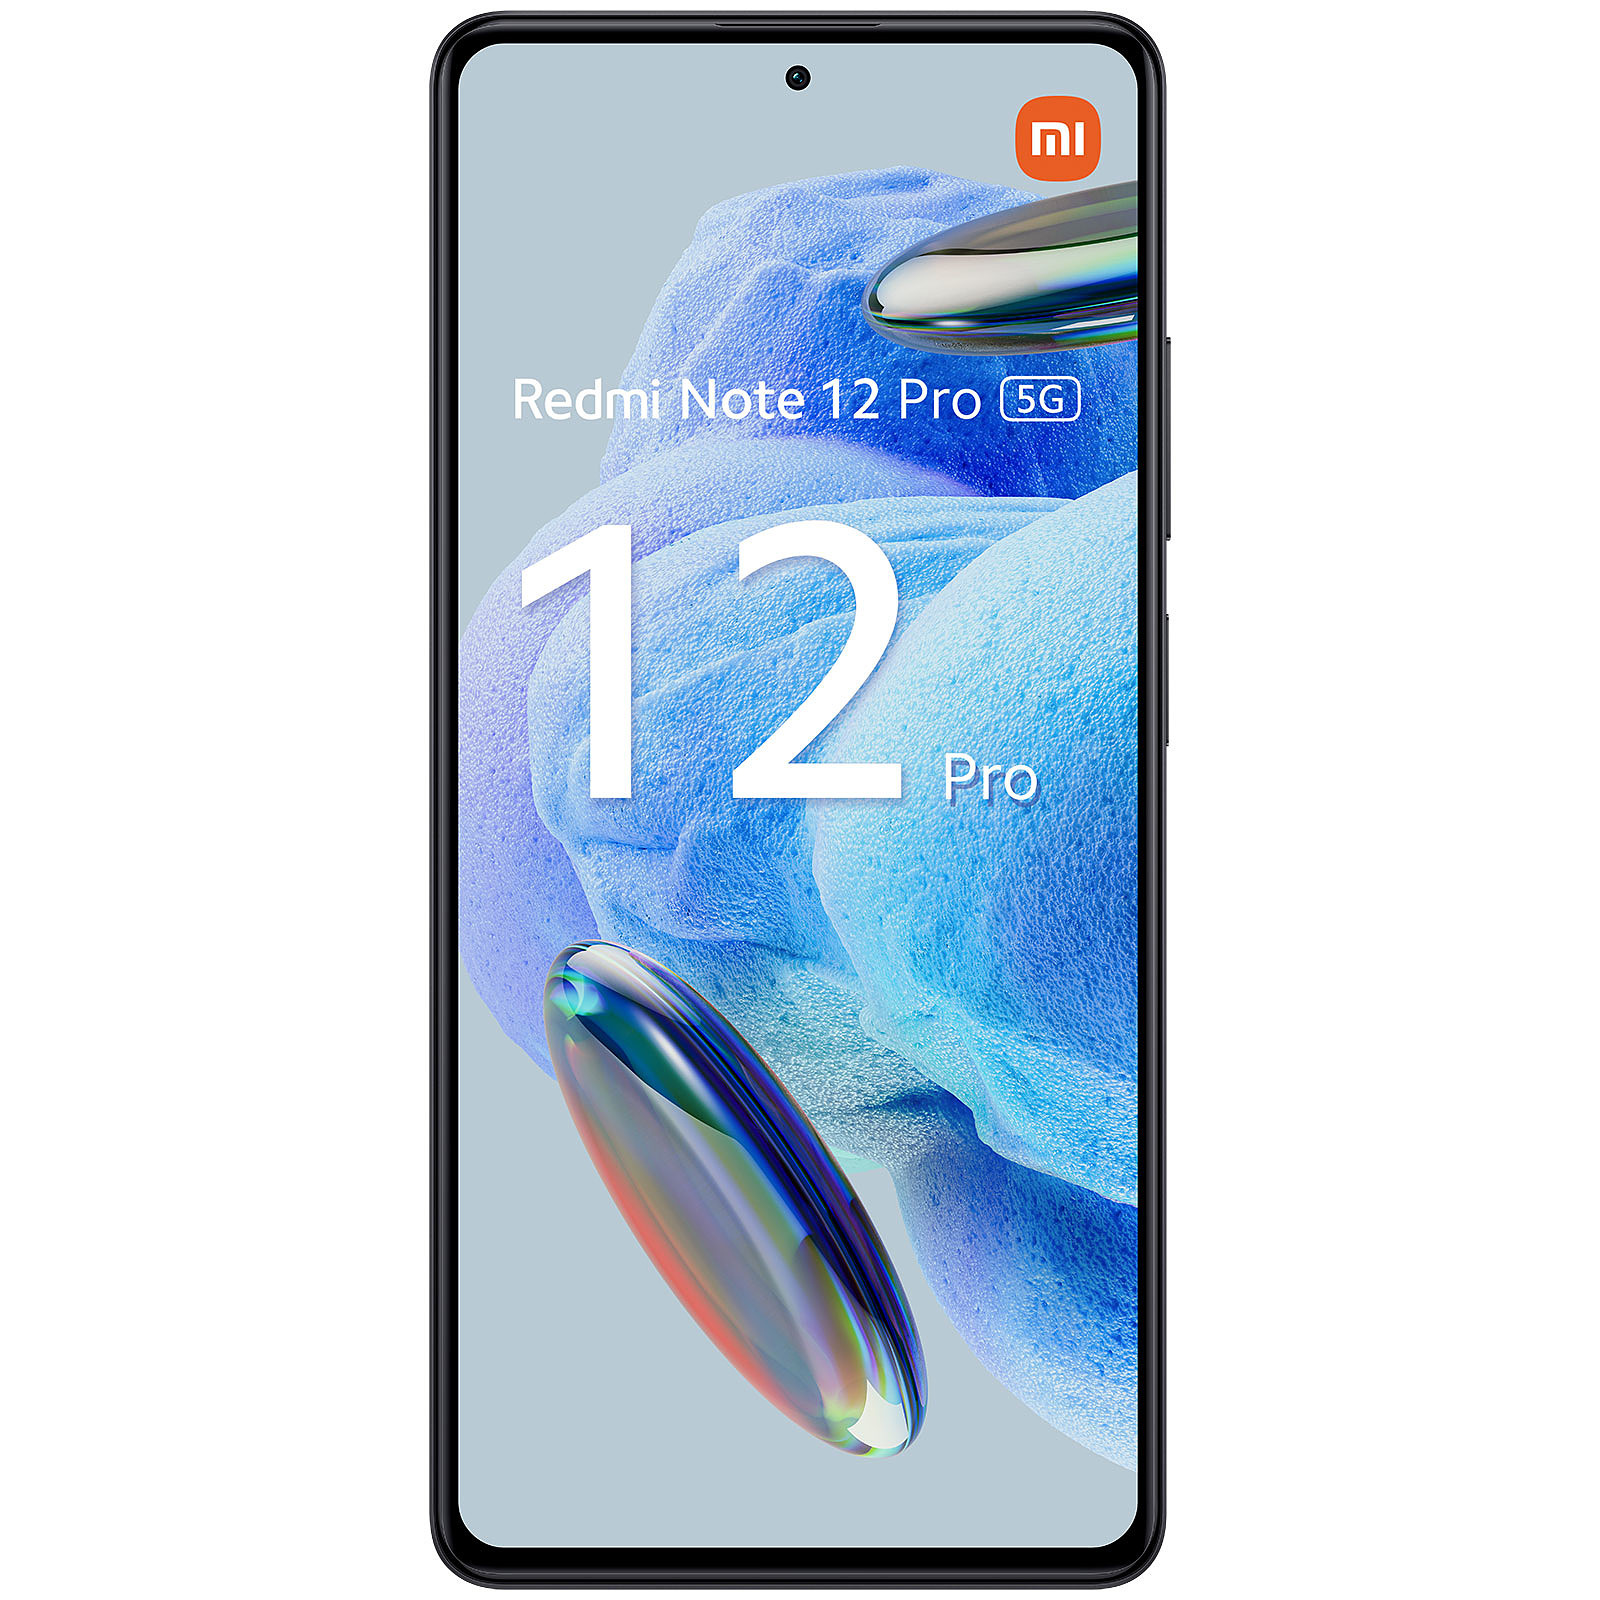 Xiaomi Redmi Note 12 Pro Dual Sim 5G 8GB 256GB Storage, White in